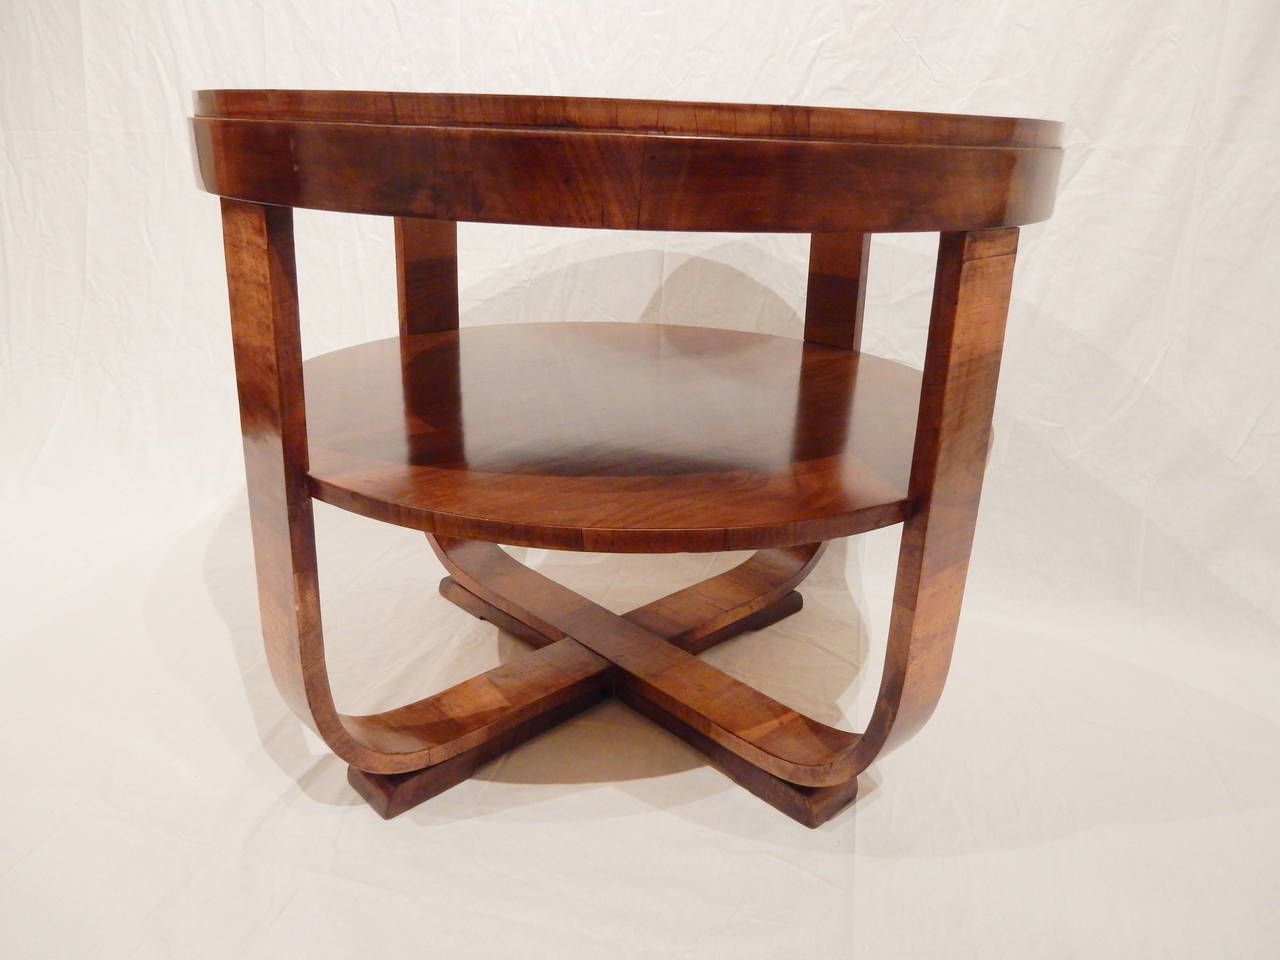 Elegant round Art Deco walnut occasional table with shelf. Very nice patina.